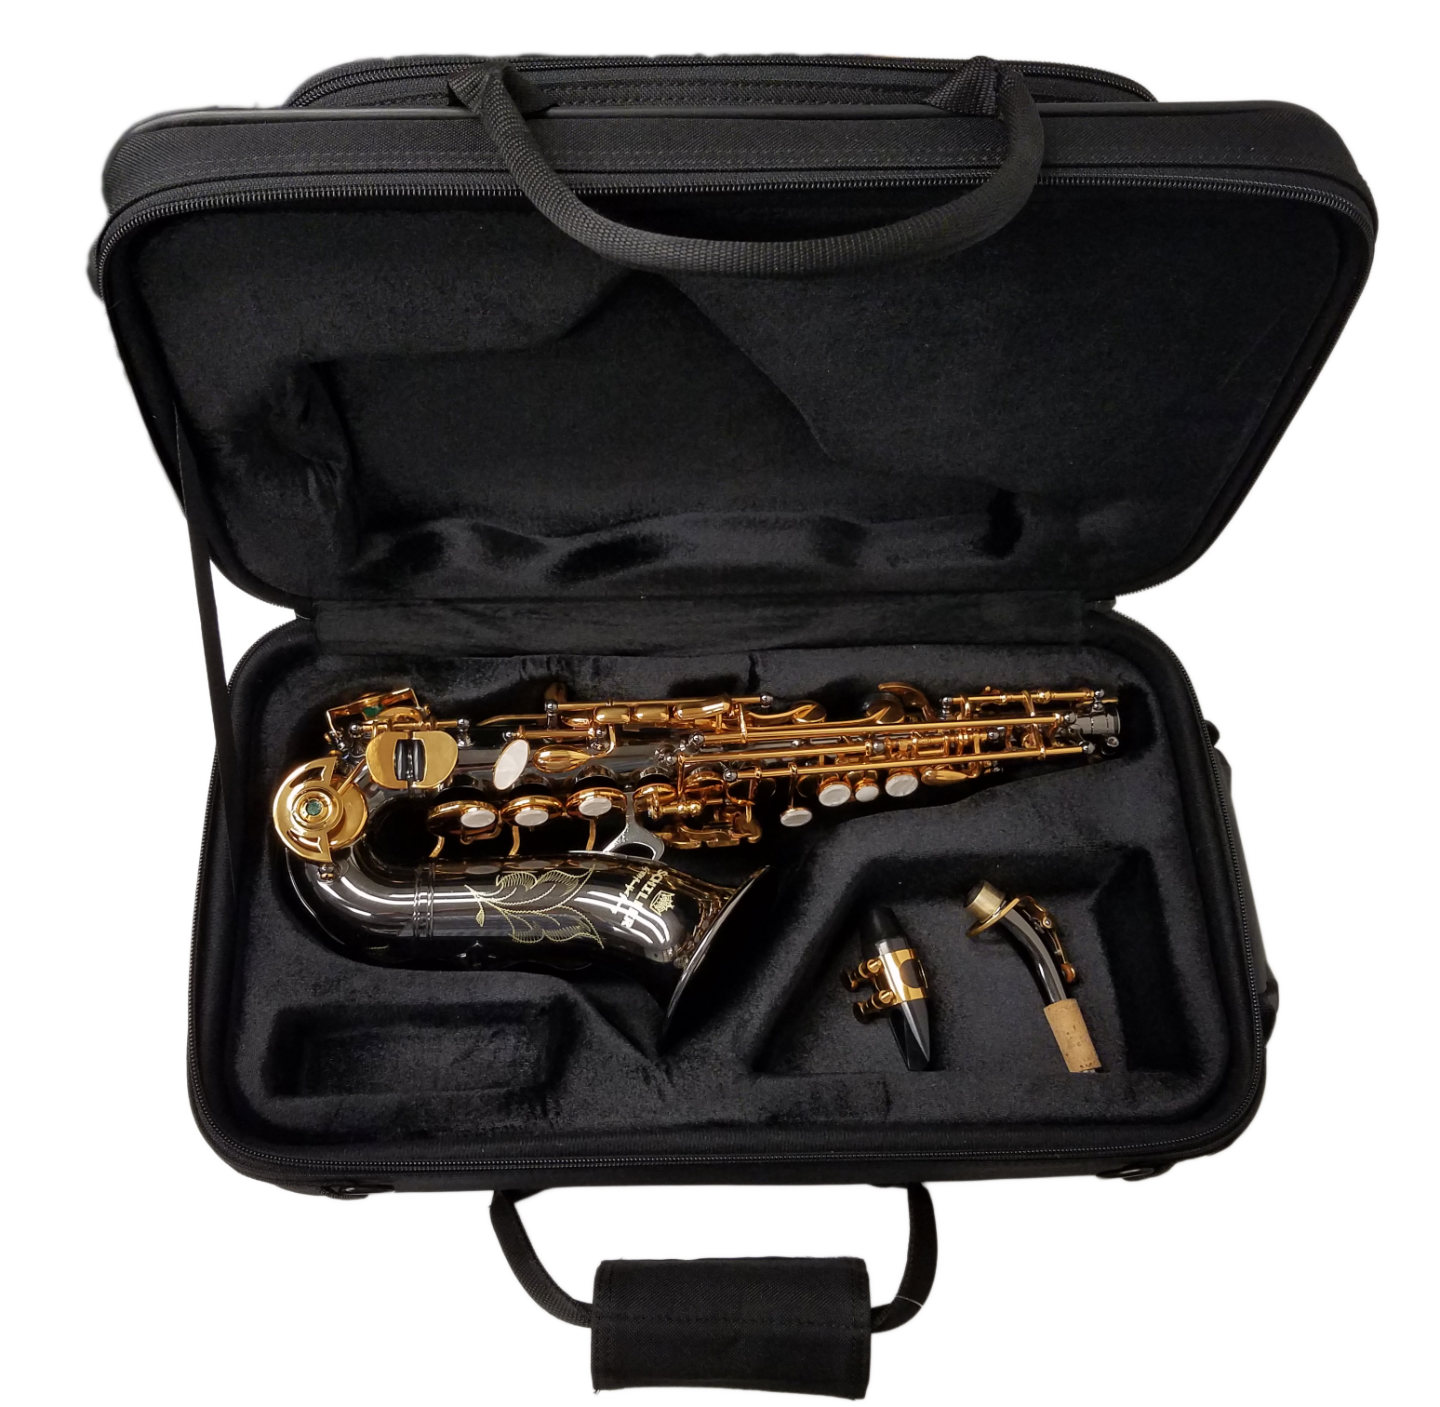 American Heritage 400 Curved Soprano Saxophone – Black & Gold